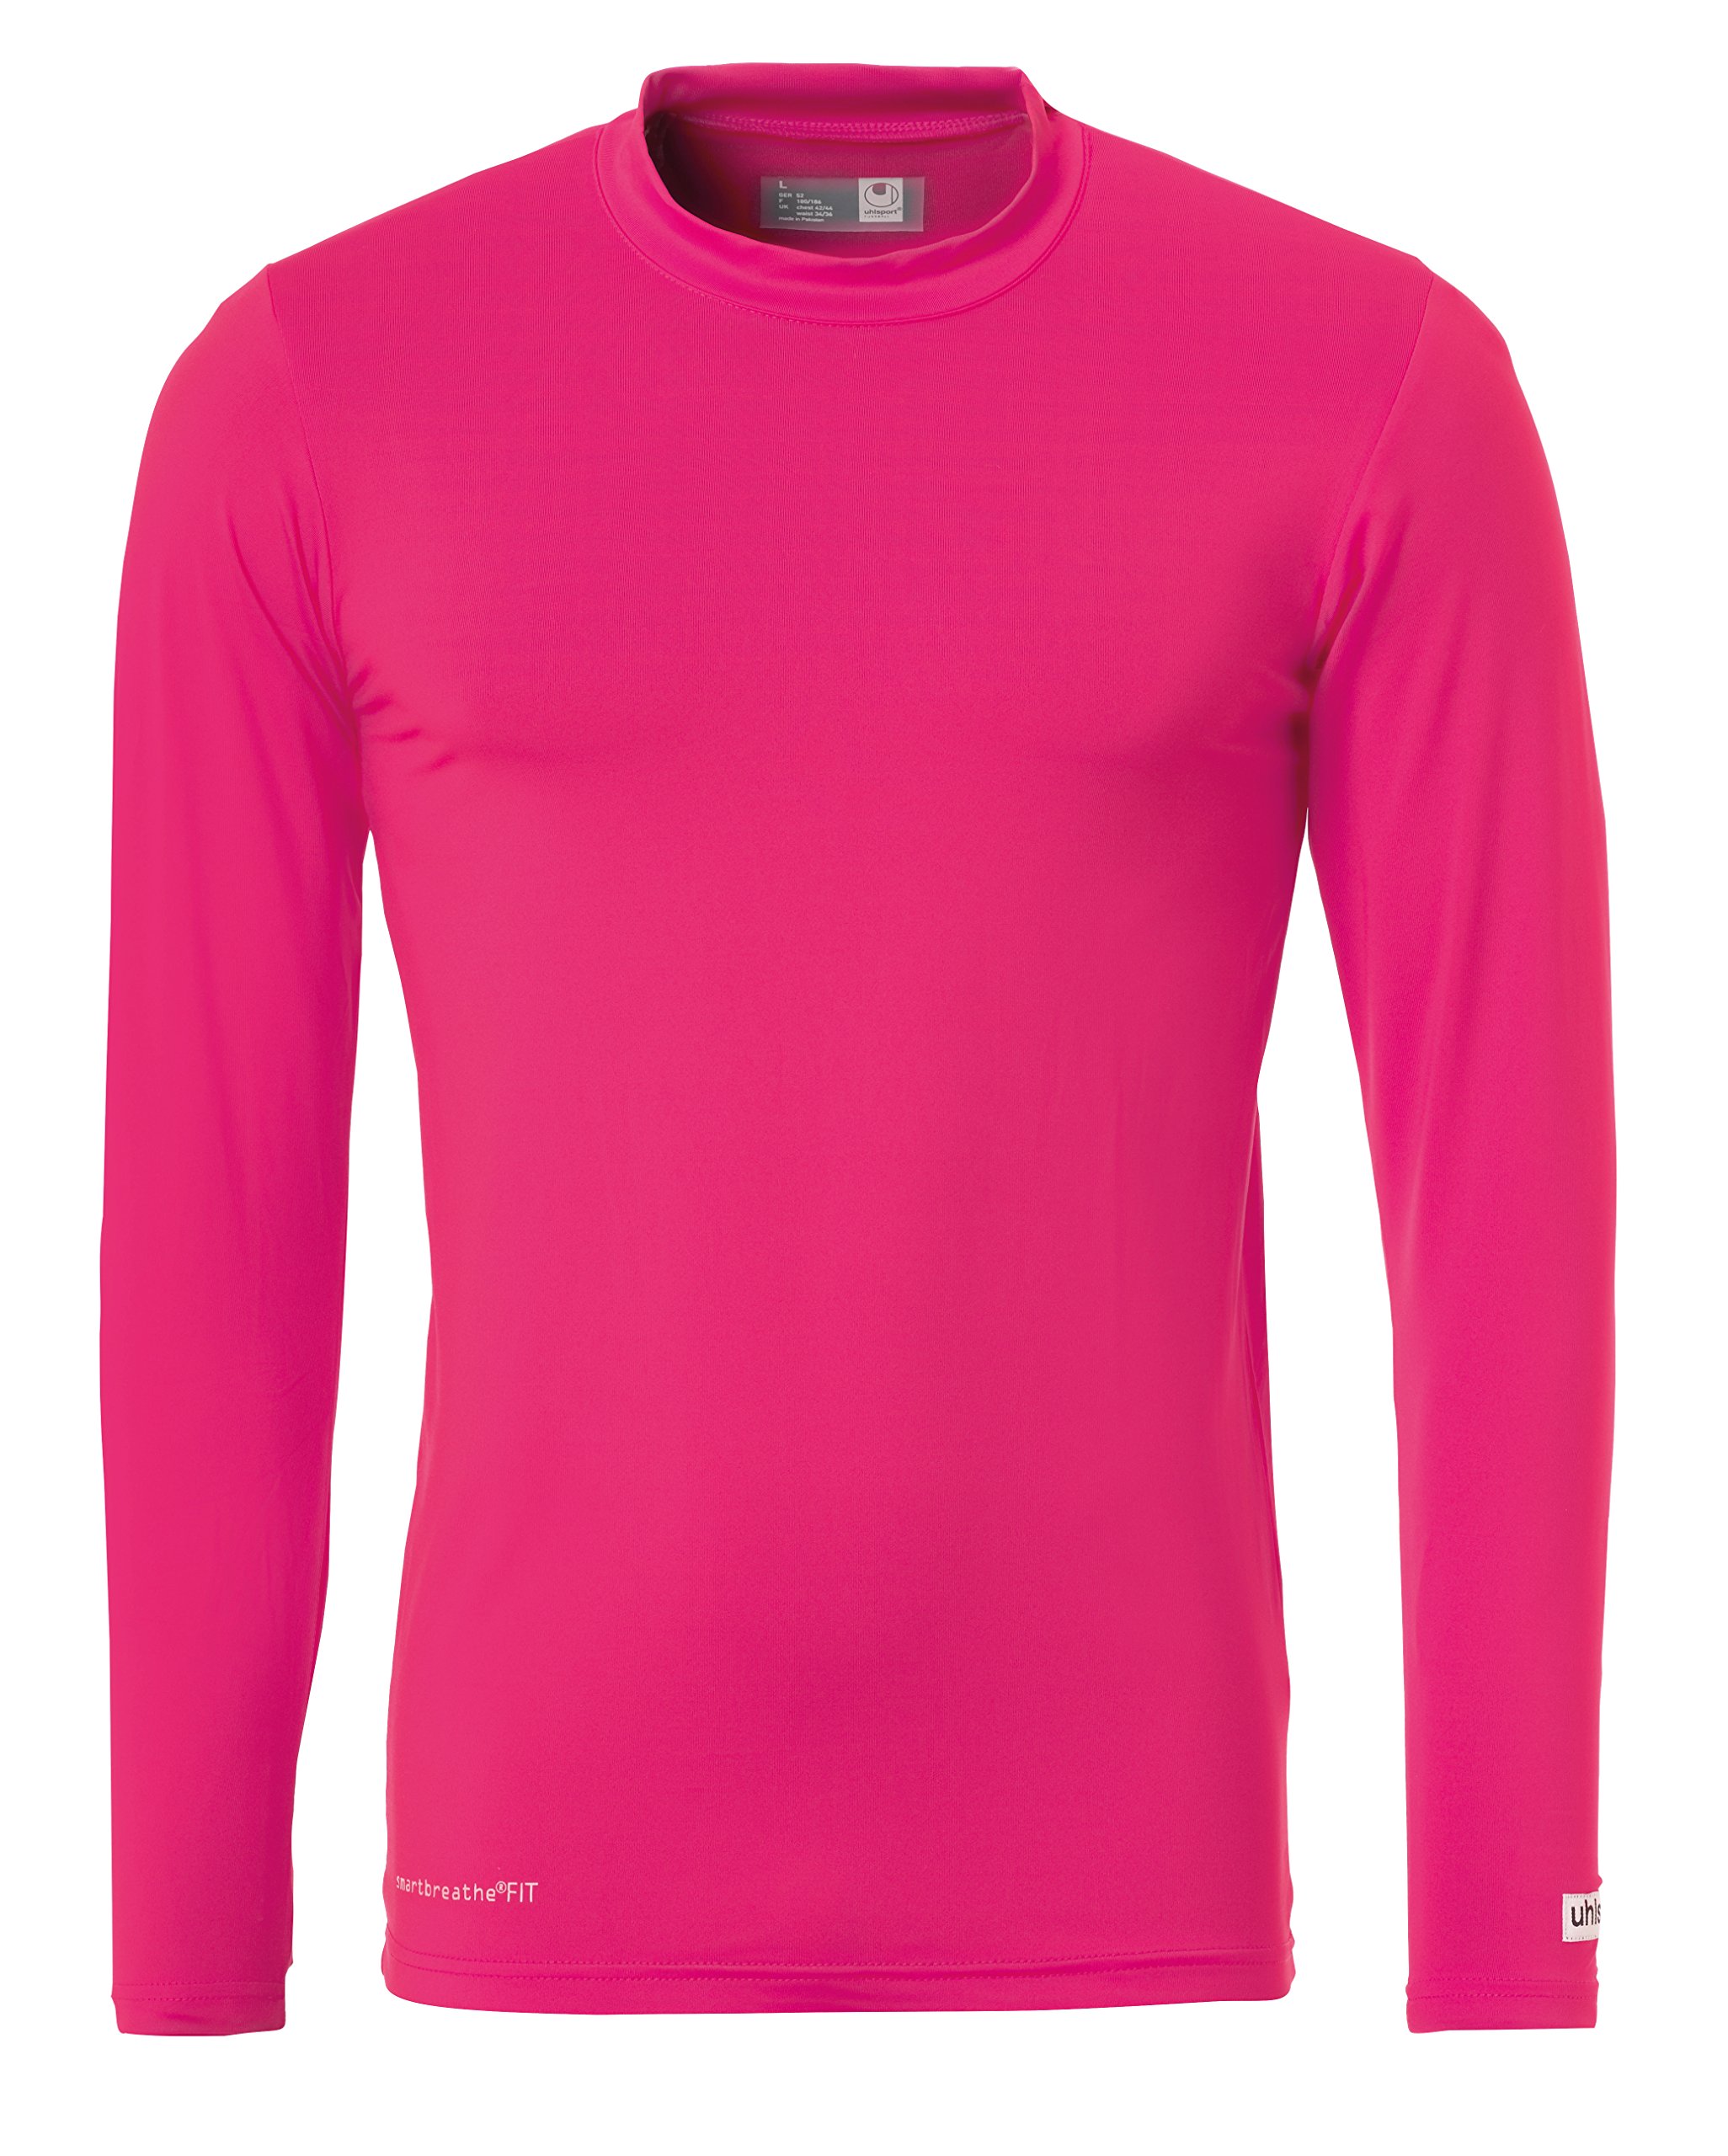 uhlsport Funktionsshirt LA Herren Shirt, pink, XL